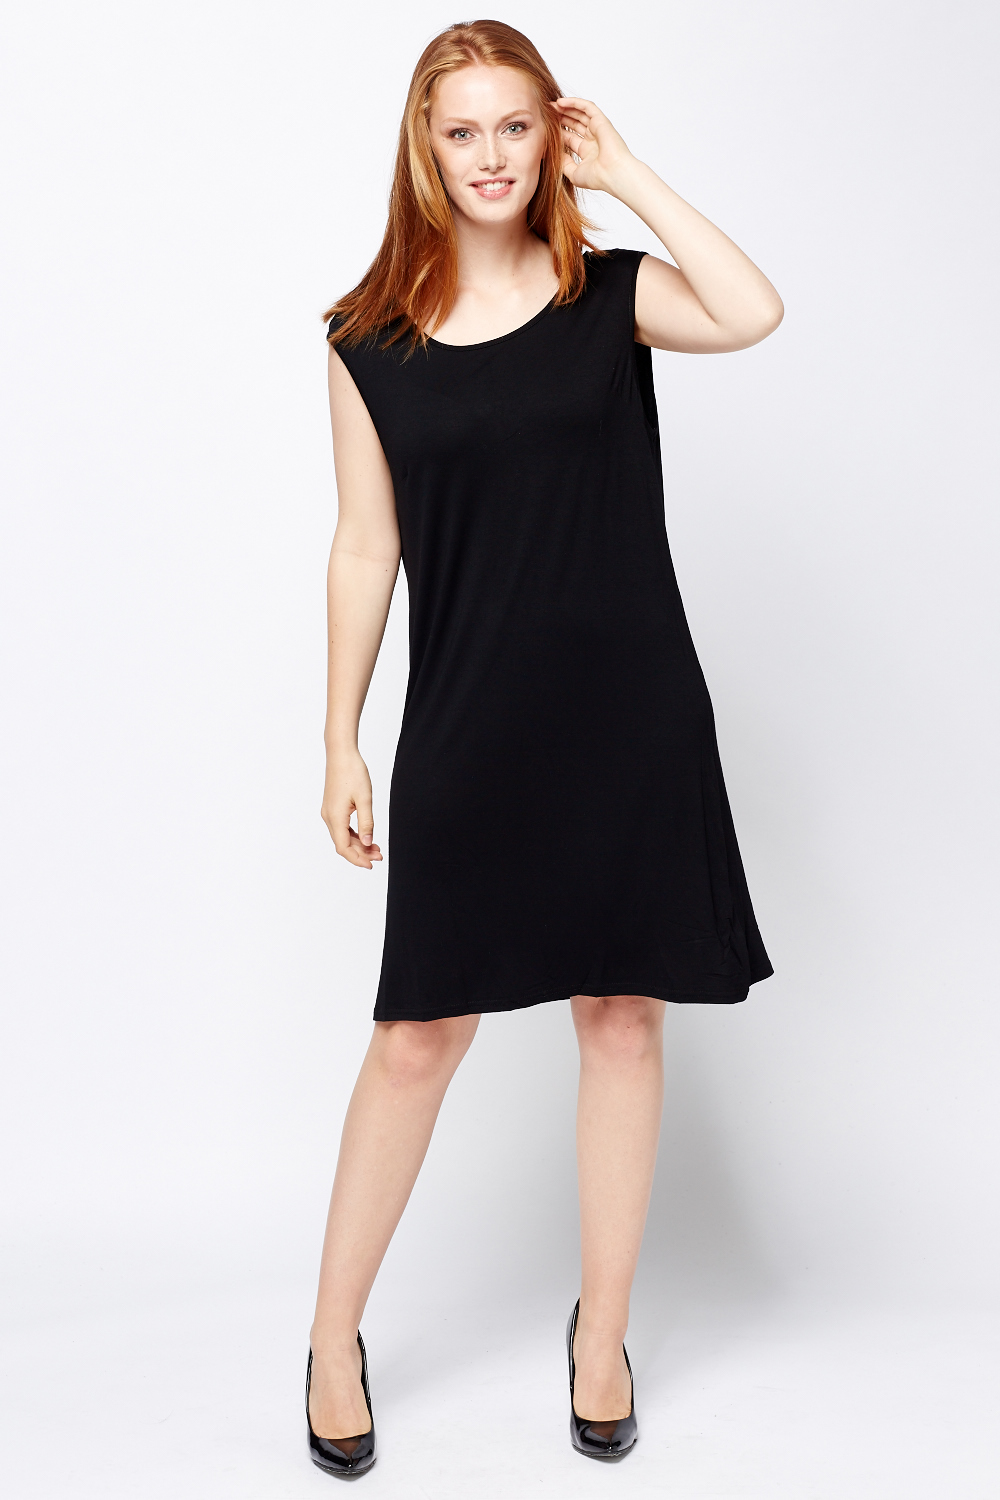 Black Sleeveless Basic Dress - Just $4